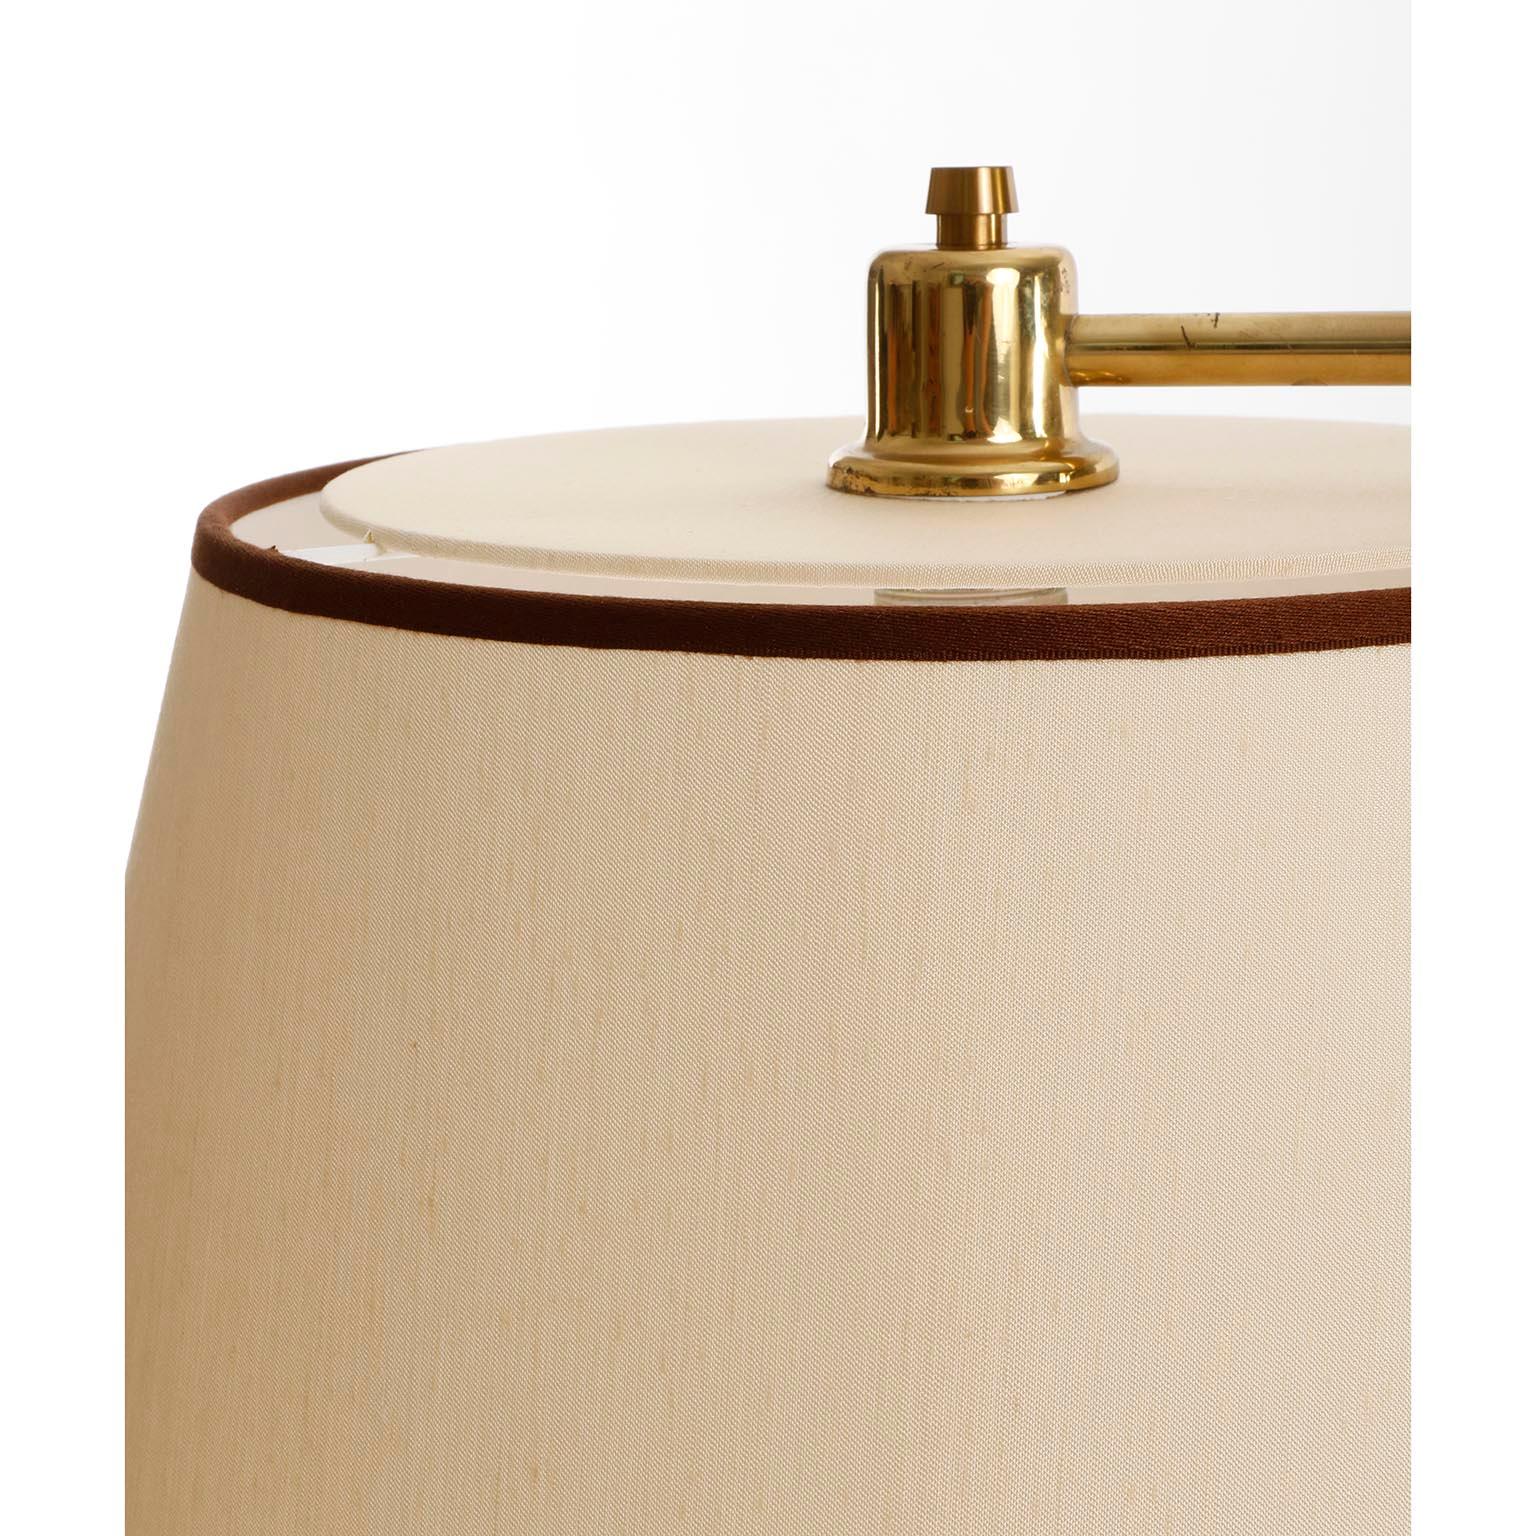 Josef Frank Adjustable Floor Lamp 'Neolift' by J.T. Kalmar, Brass Wood, 1950s For Sale 4